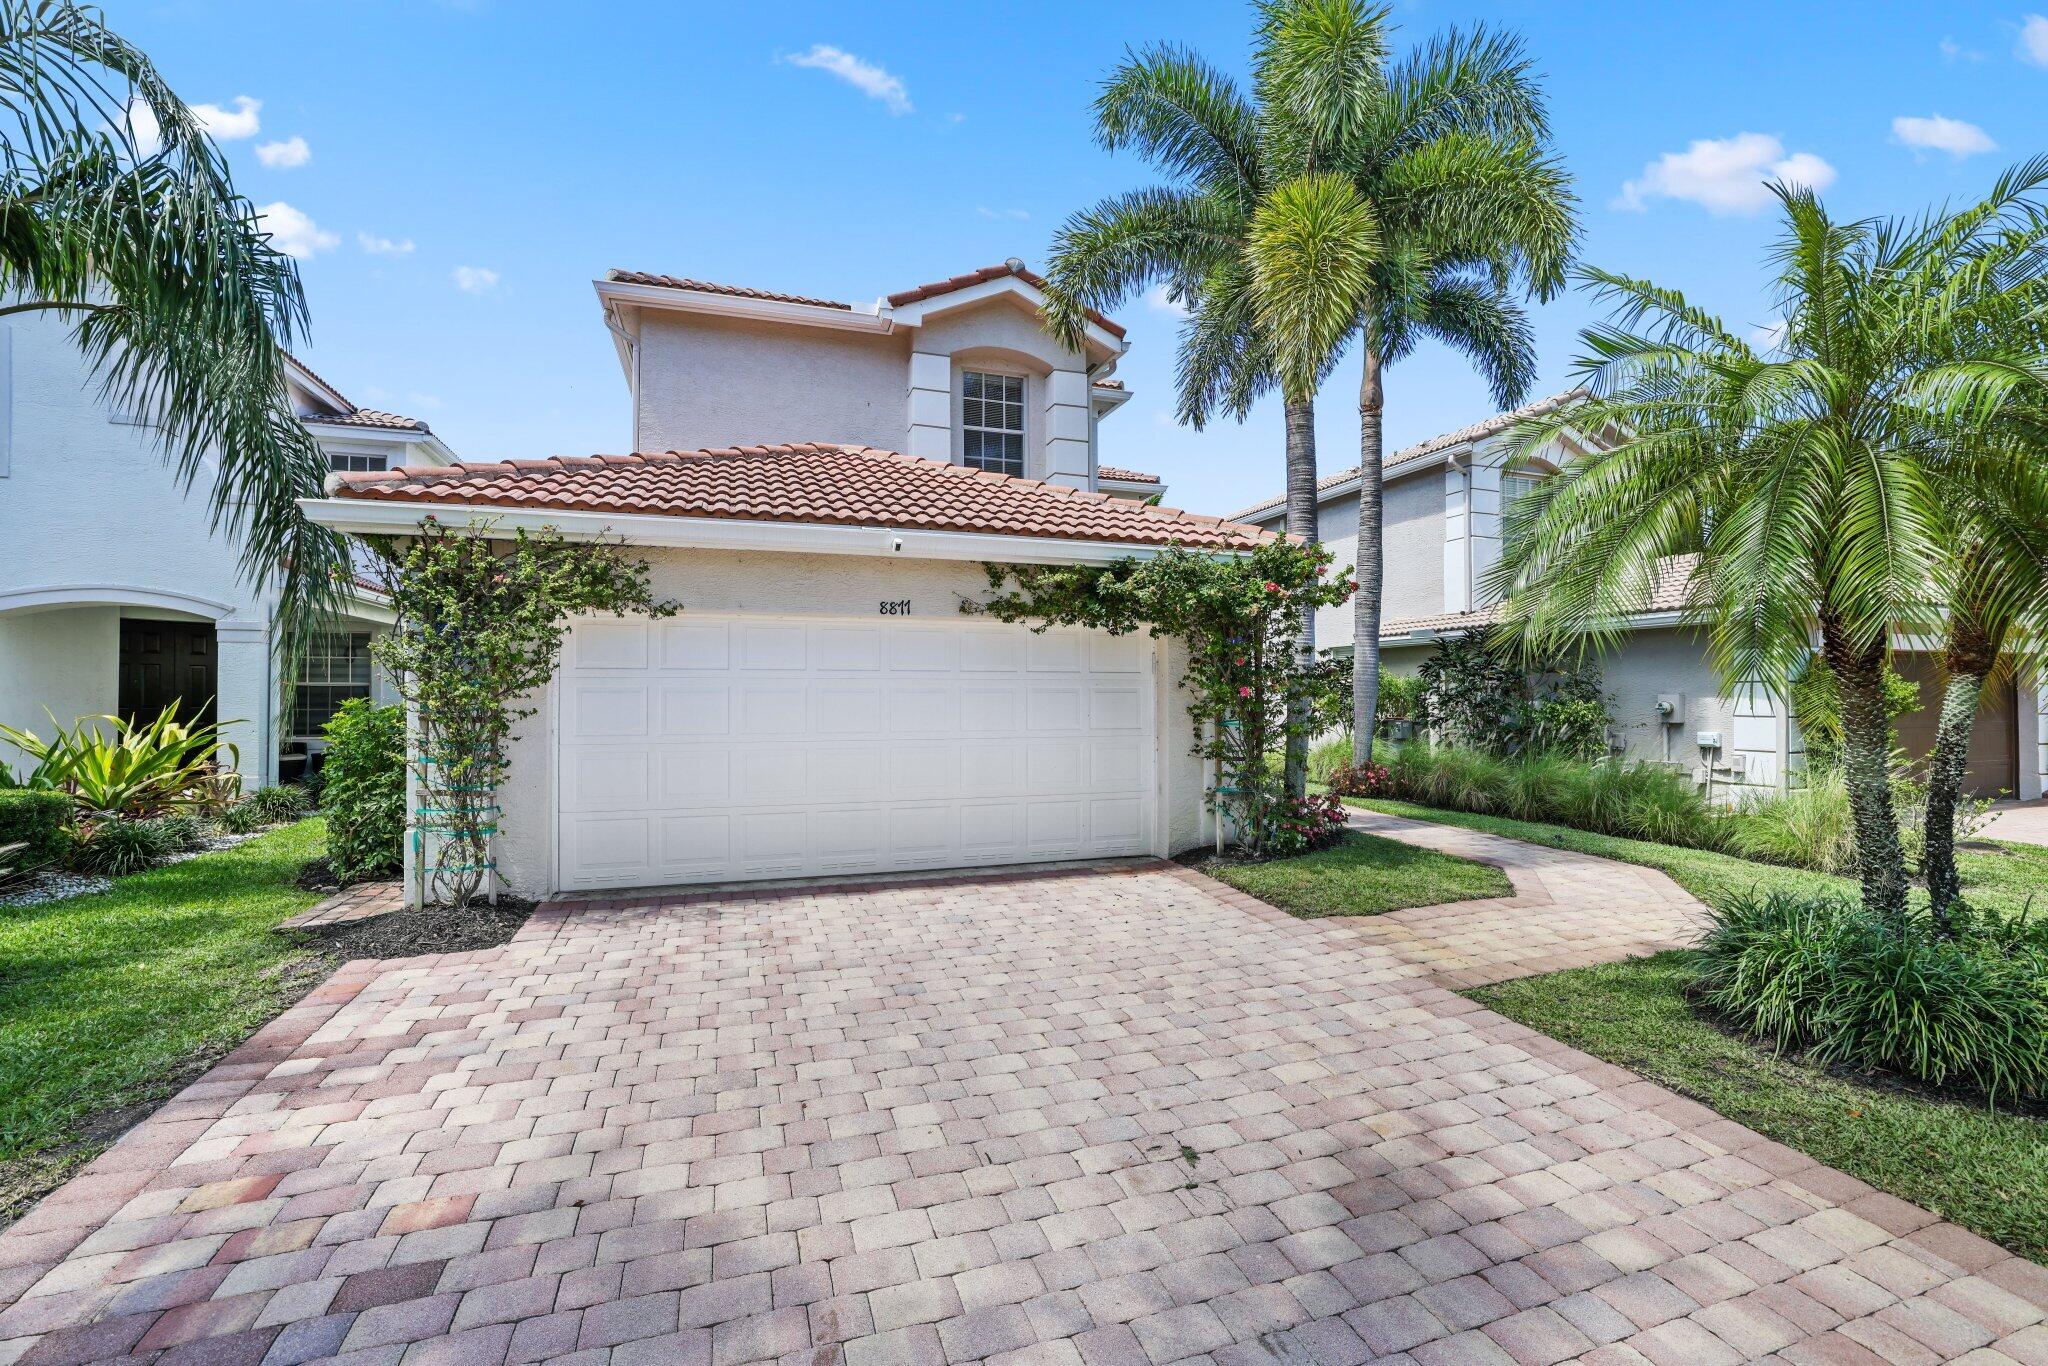 Property for Sale at 8877 Kettle Drum Ter Terrace, Boynton Beach, Palm Beach County, Florida - Bedrooms: 4 
Bathrooms: 2.5  - $775,000